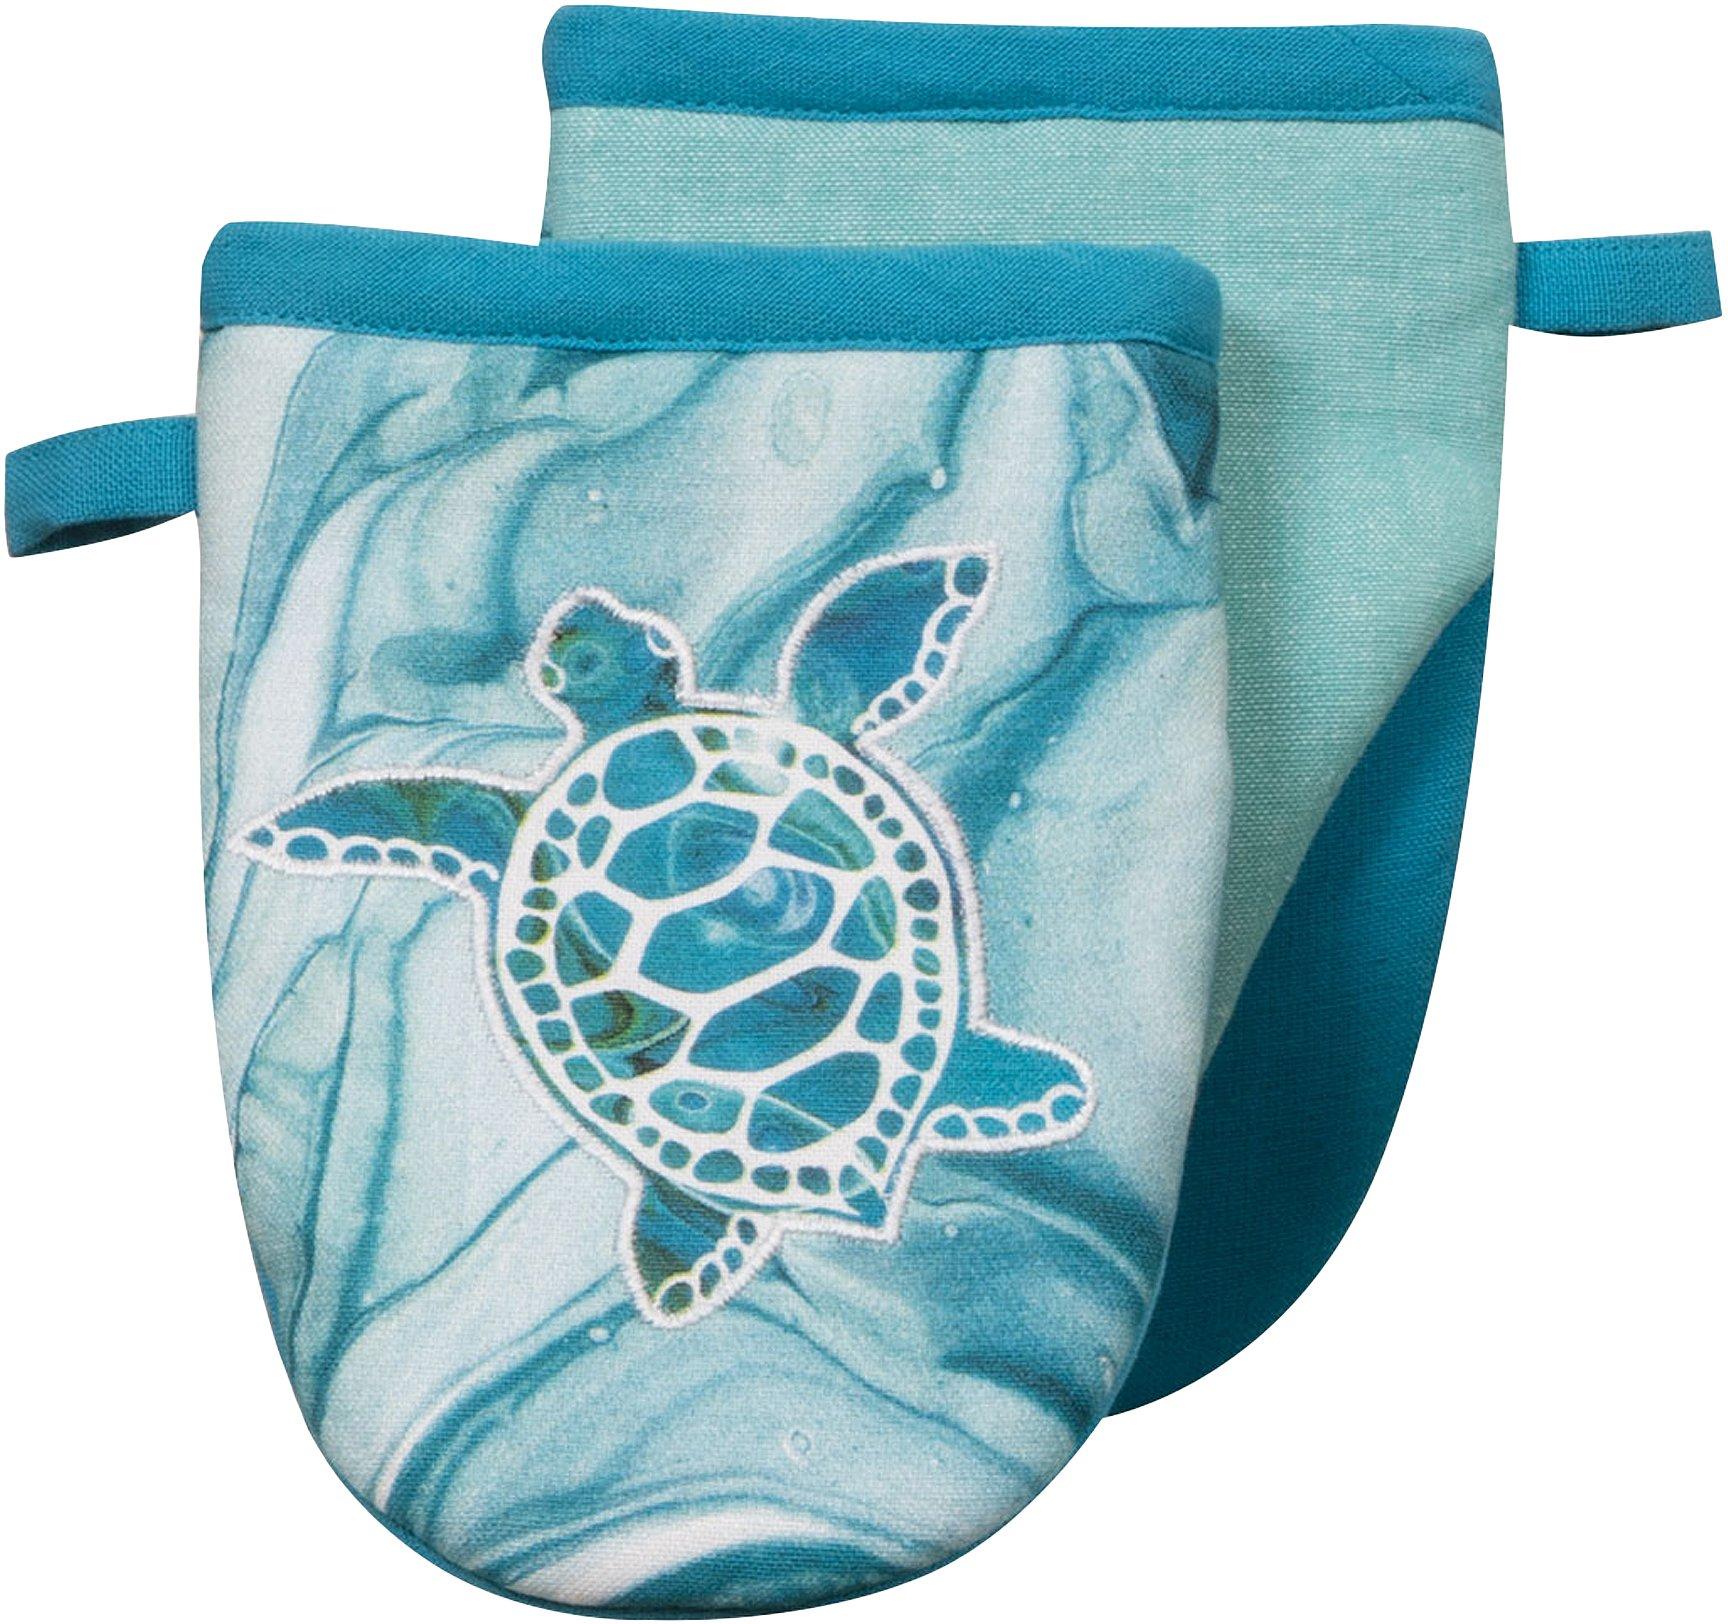 https://images.beallsflorida.com/i/beallsflorida/674-7960-1471-49-yyy/*Sea-Turtle-Embroidered-Mini-Oven-Mitt*?$product$&fmt=auto&qlt=default